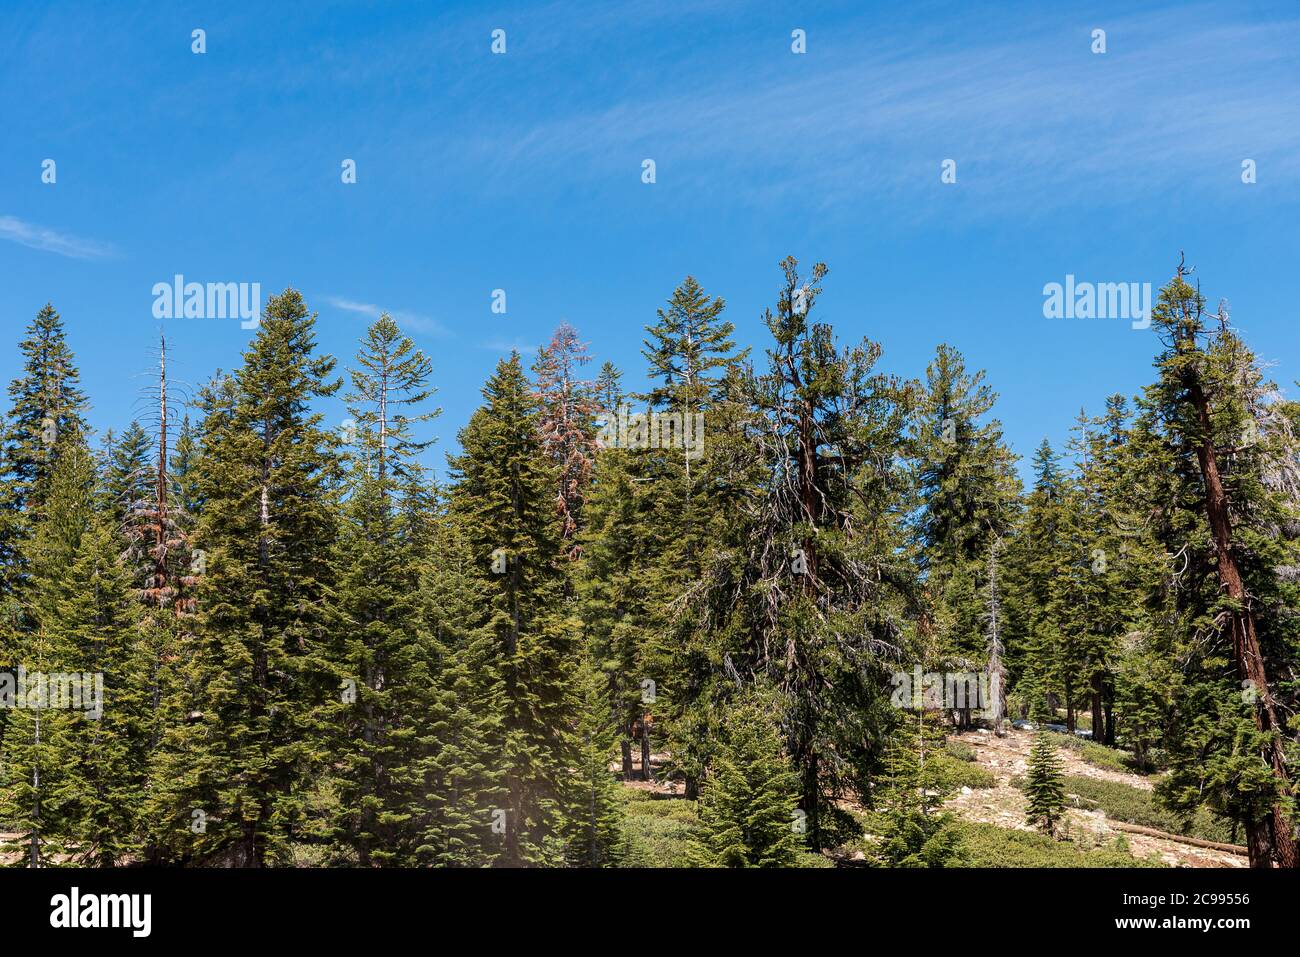 Green pine forest on hillside under bright blue skies. Stock Photo